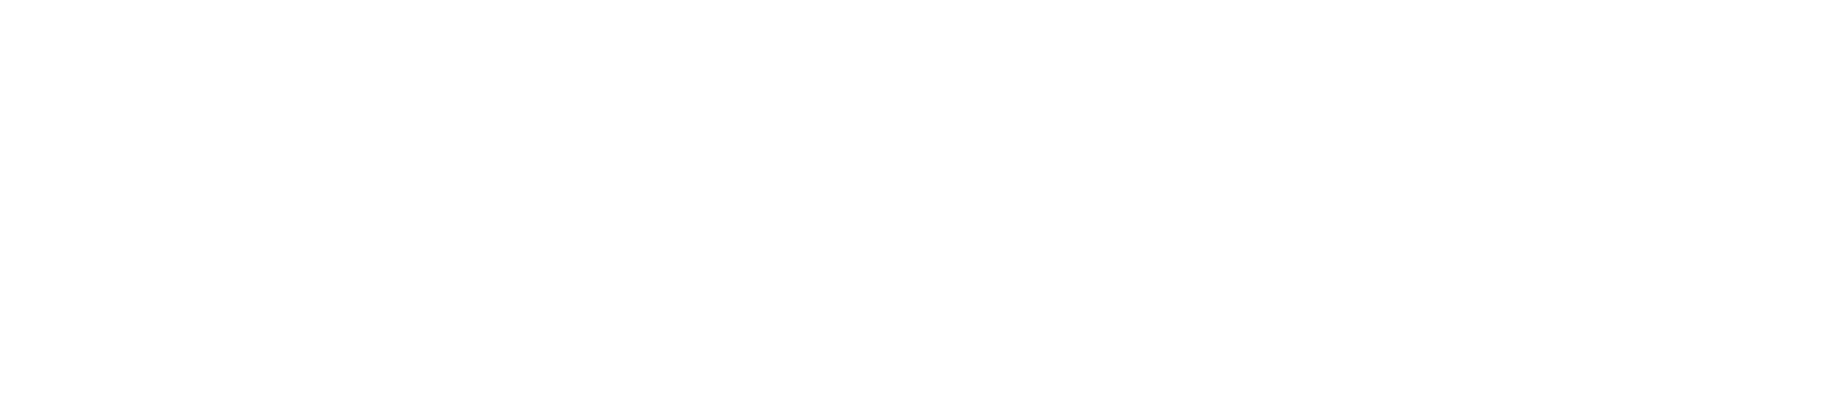 Natural Selection Tour Logo